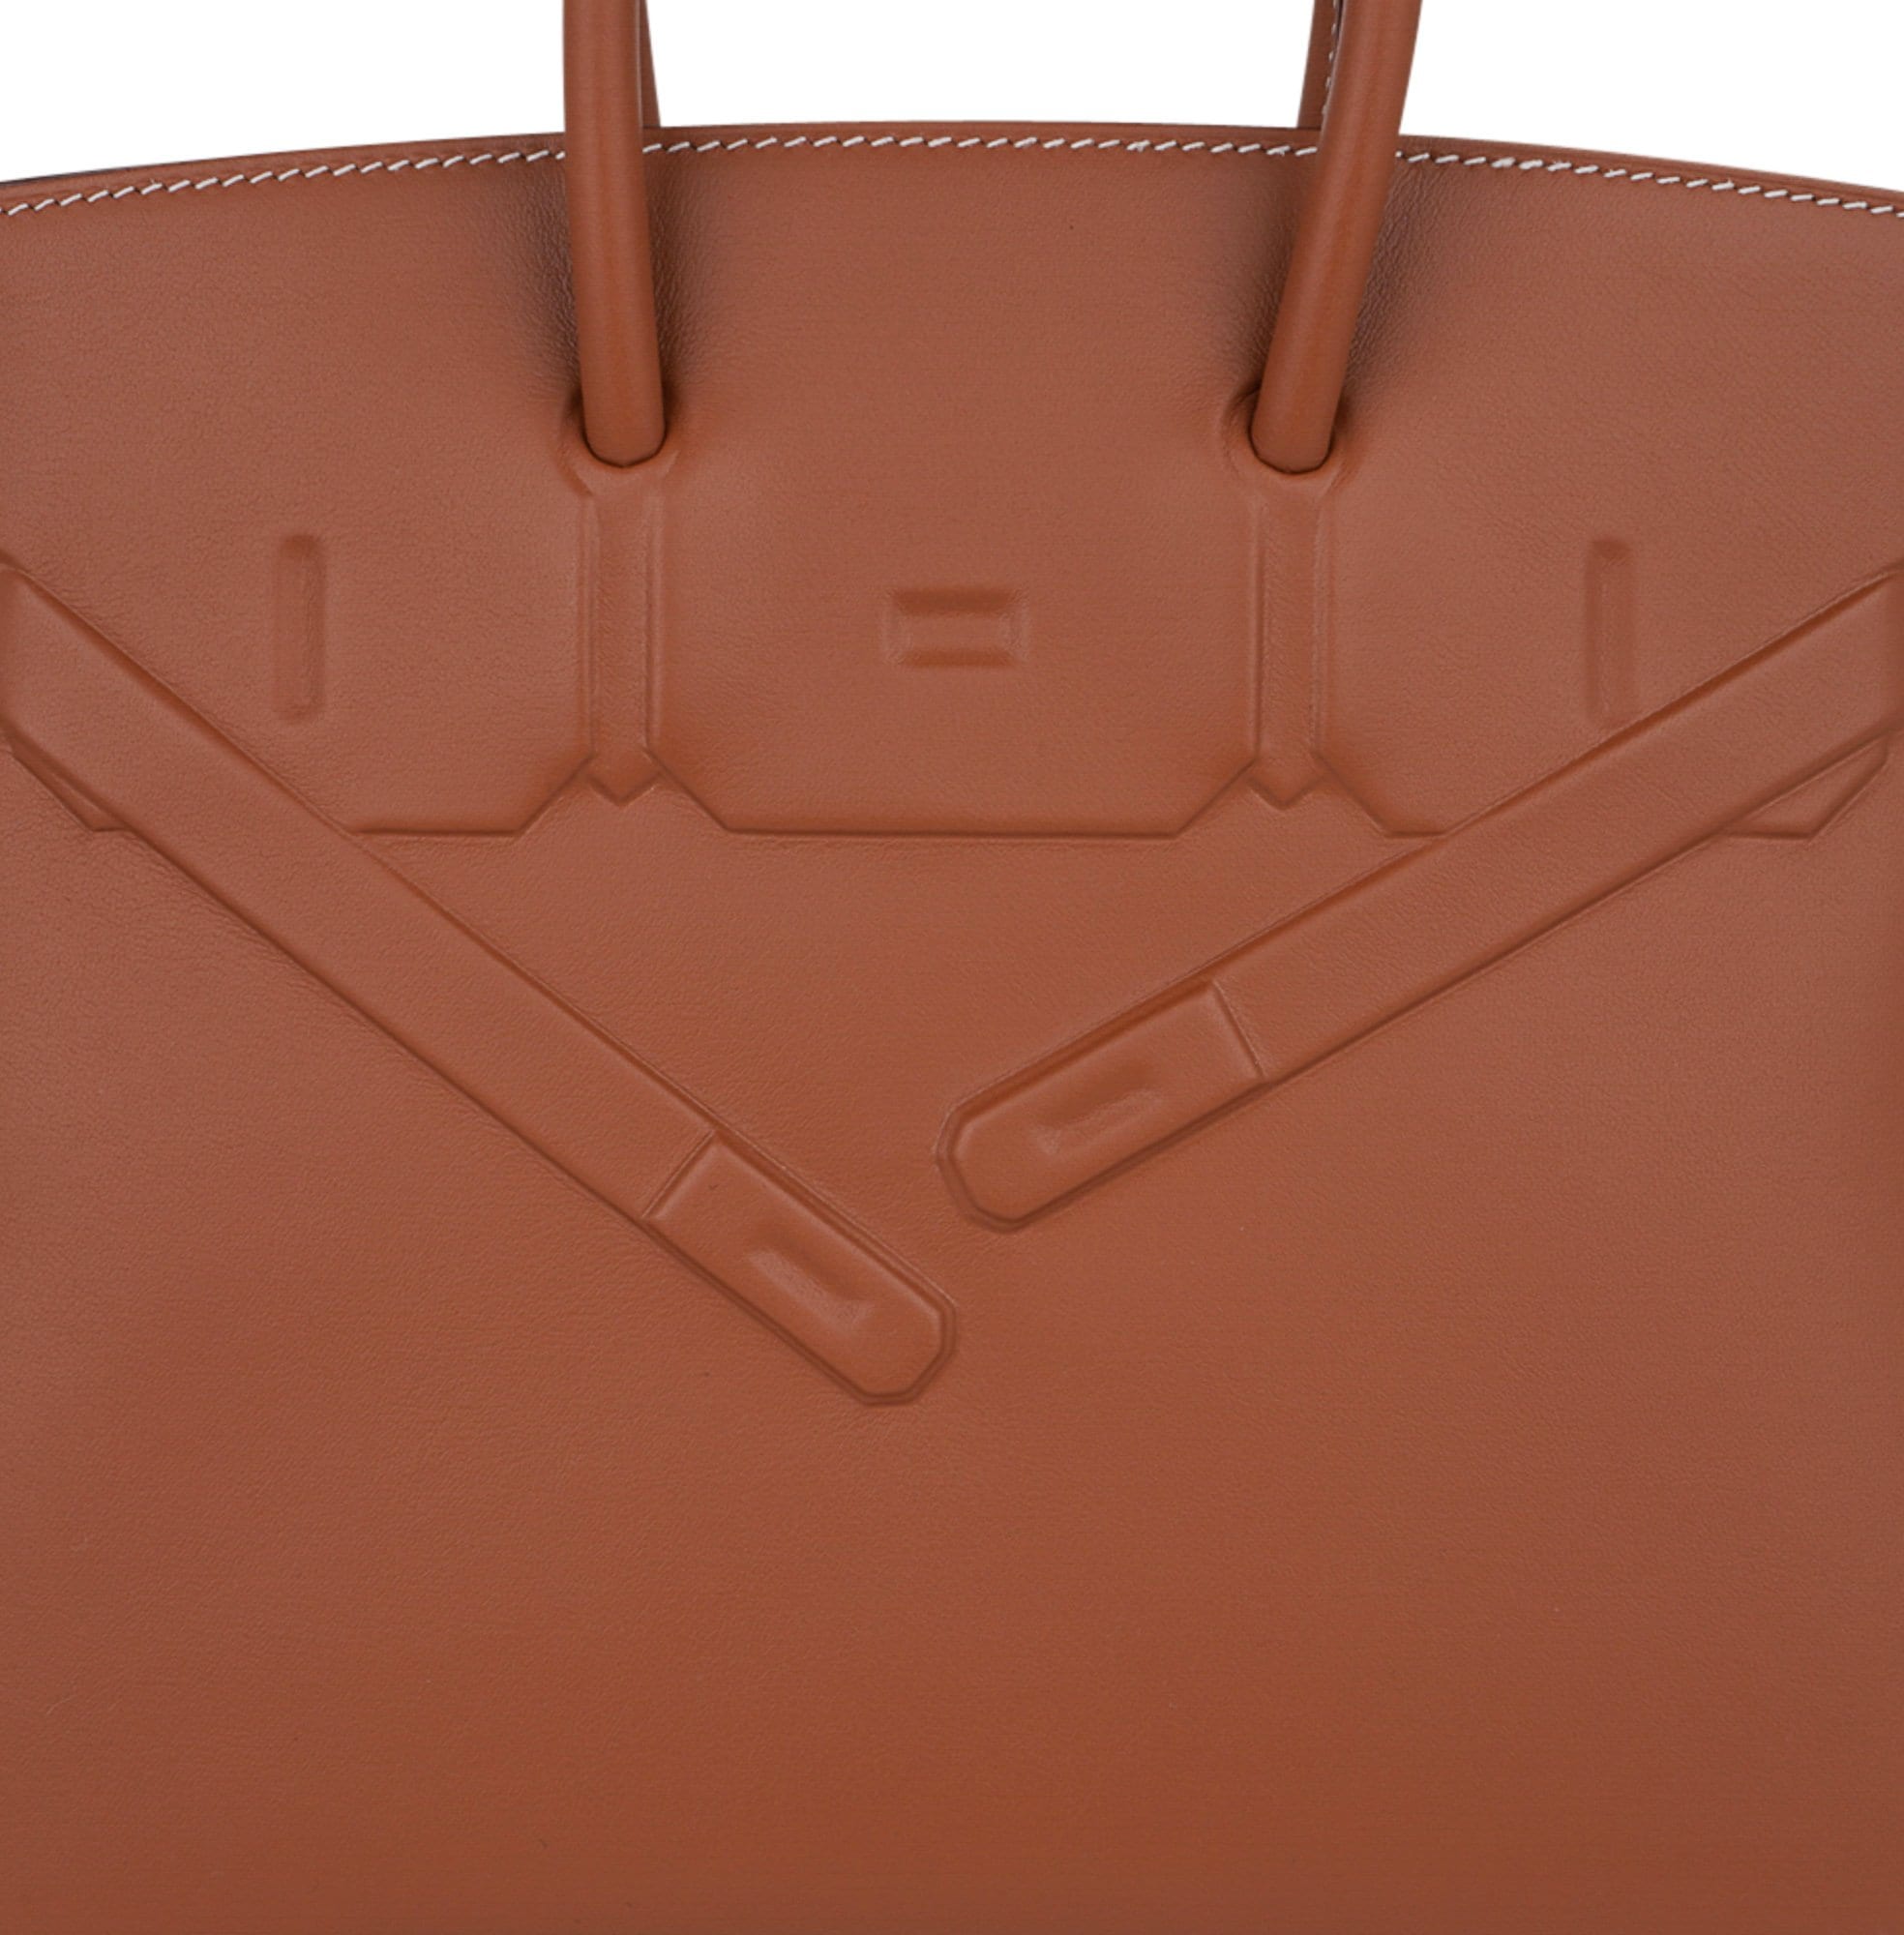 Hermès 2021 Shadow Birkin 25 Handbag - Brown